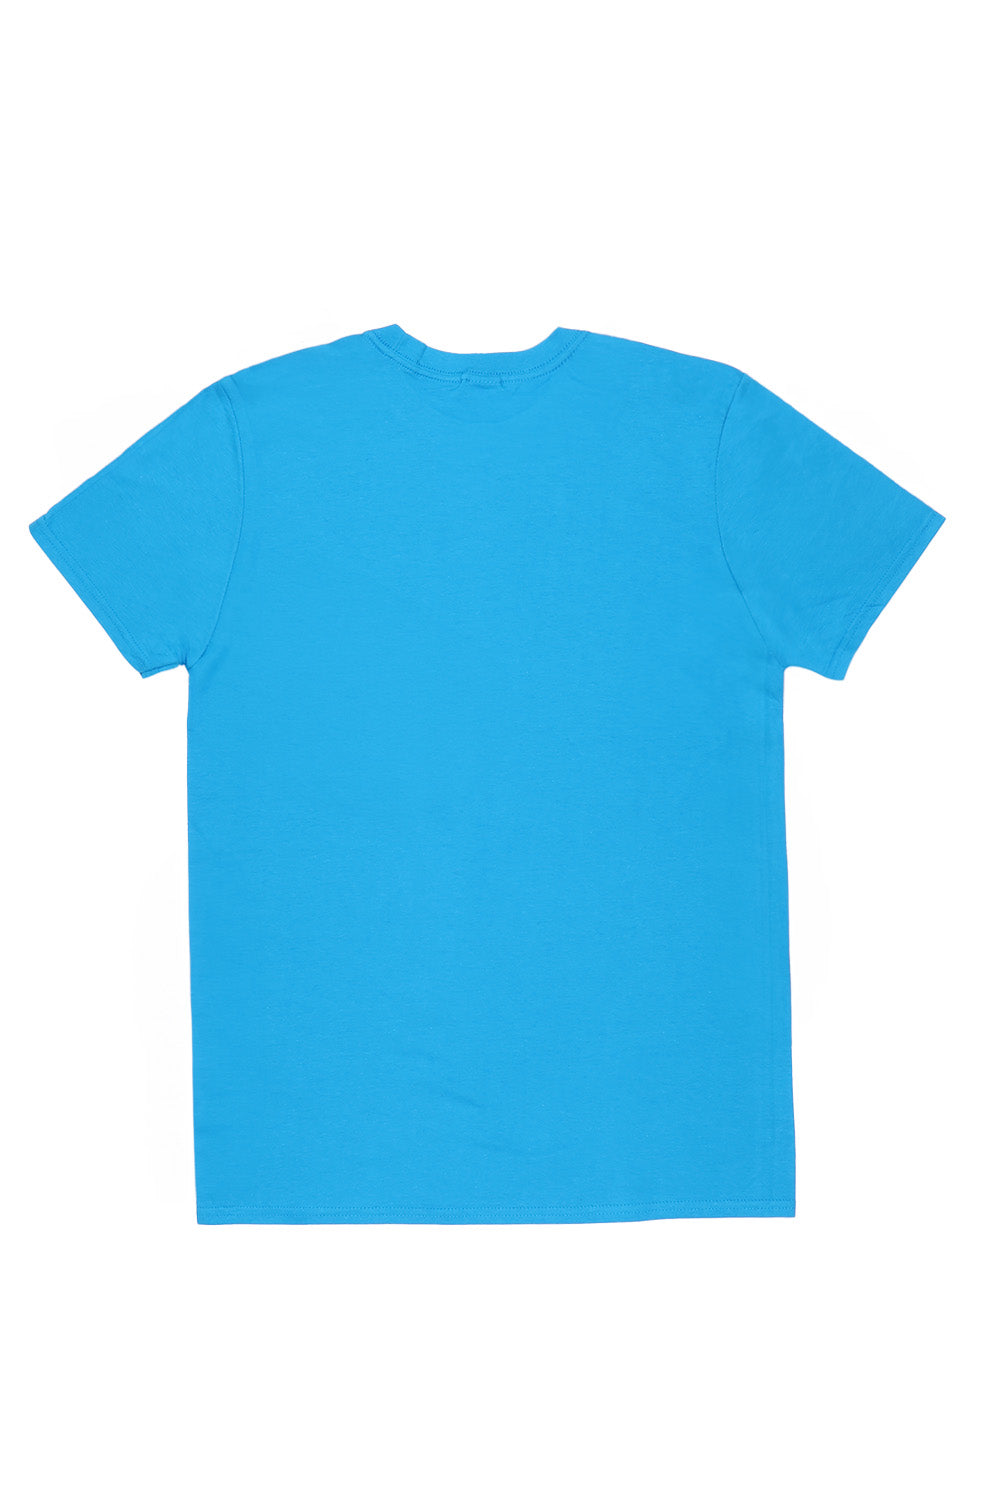 Las Vegas T-Shirt in Sapphire Blue (Custom Packs)